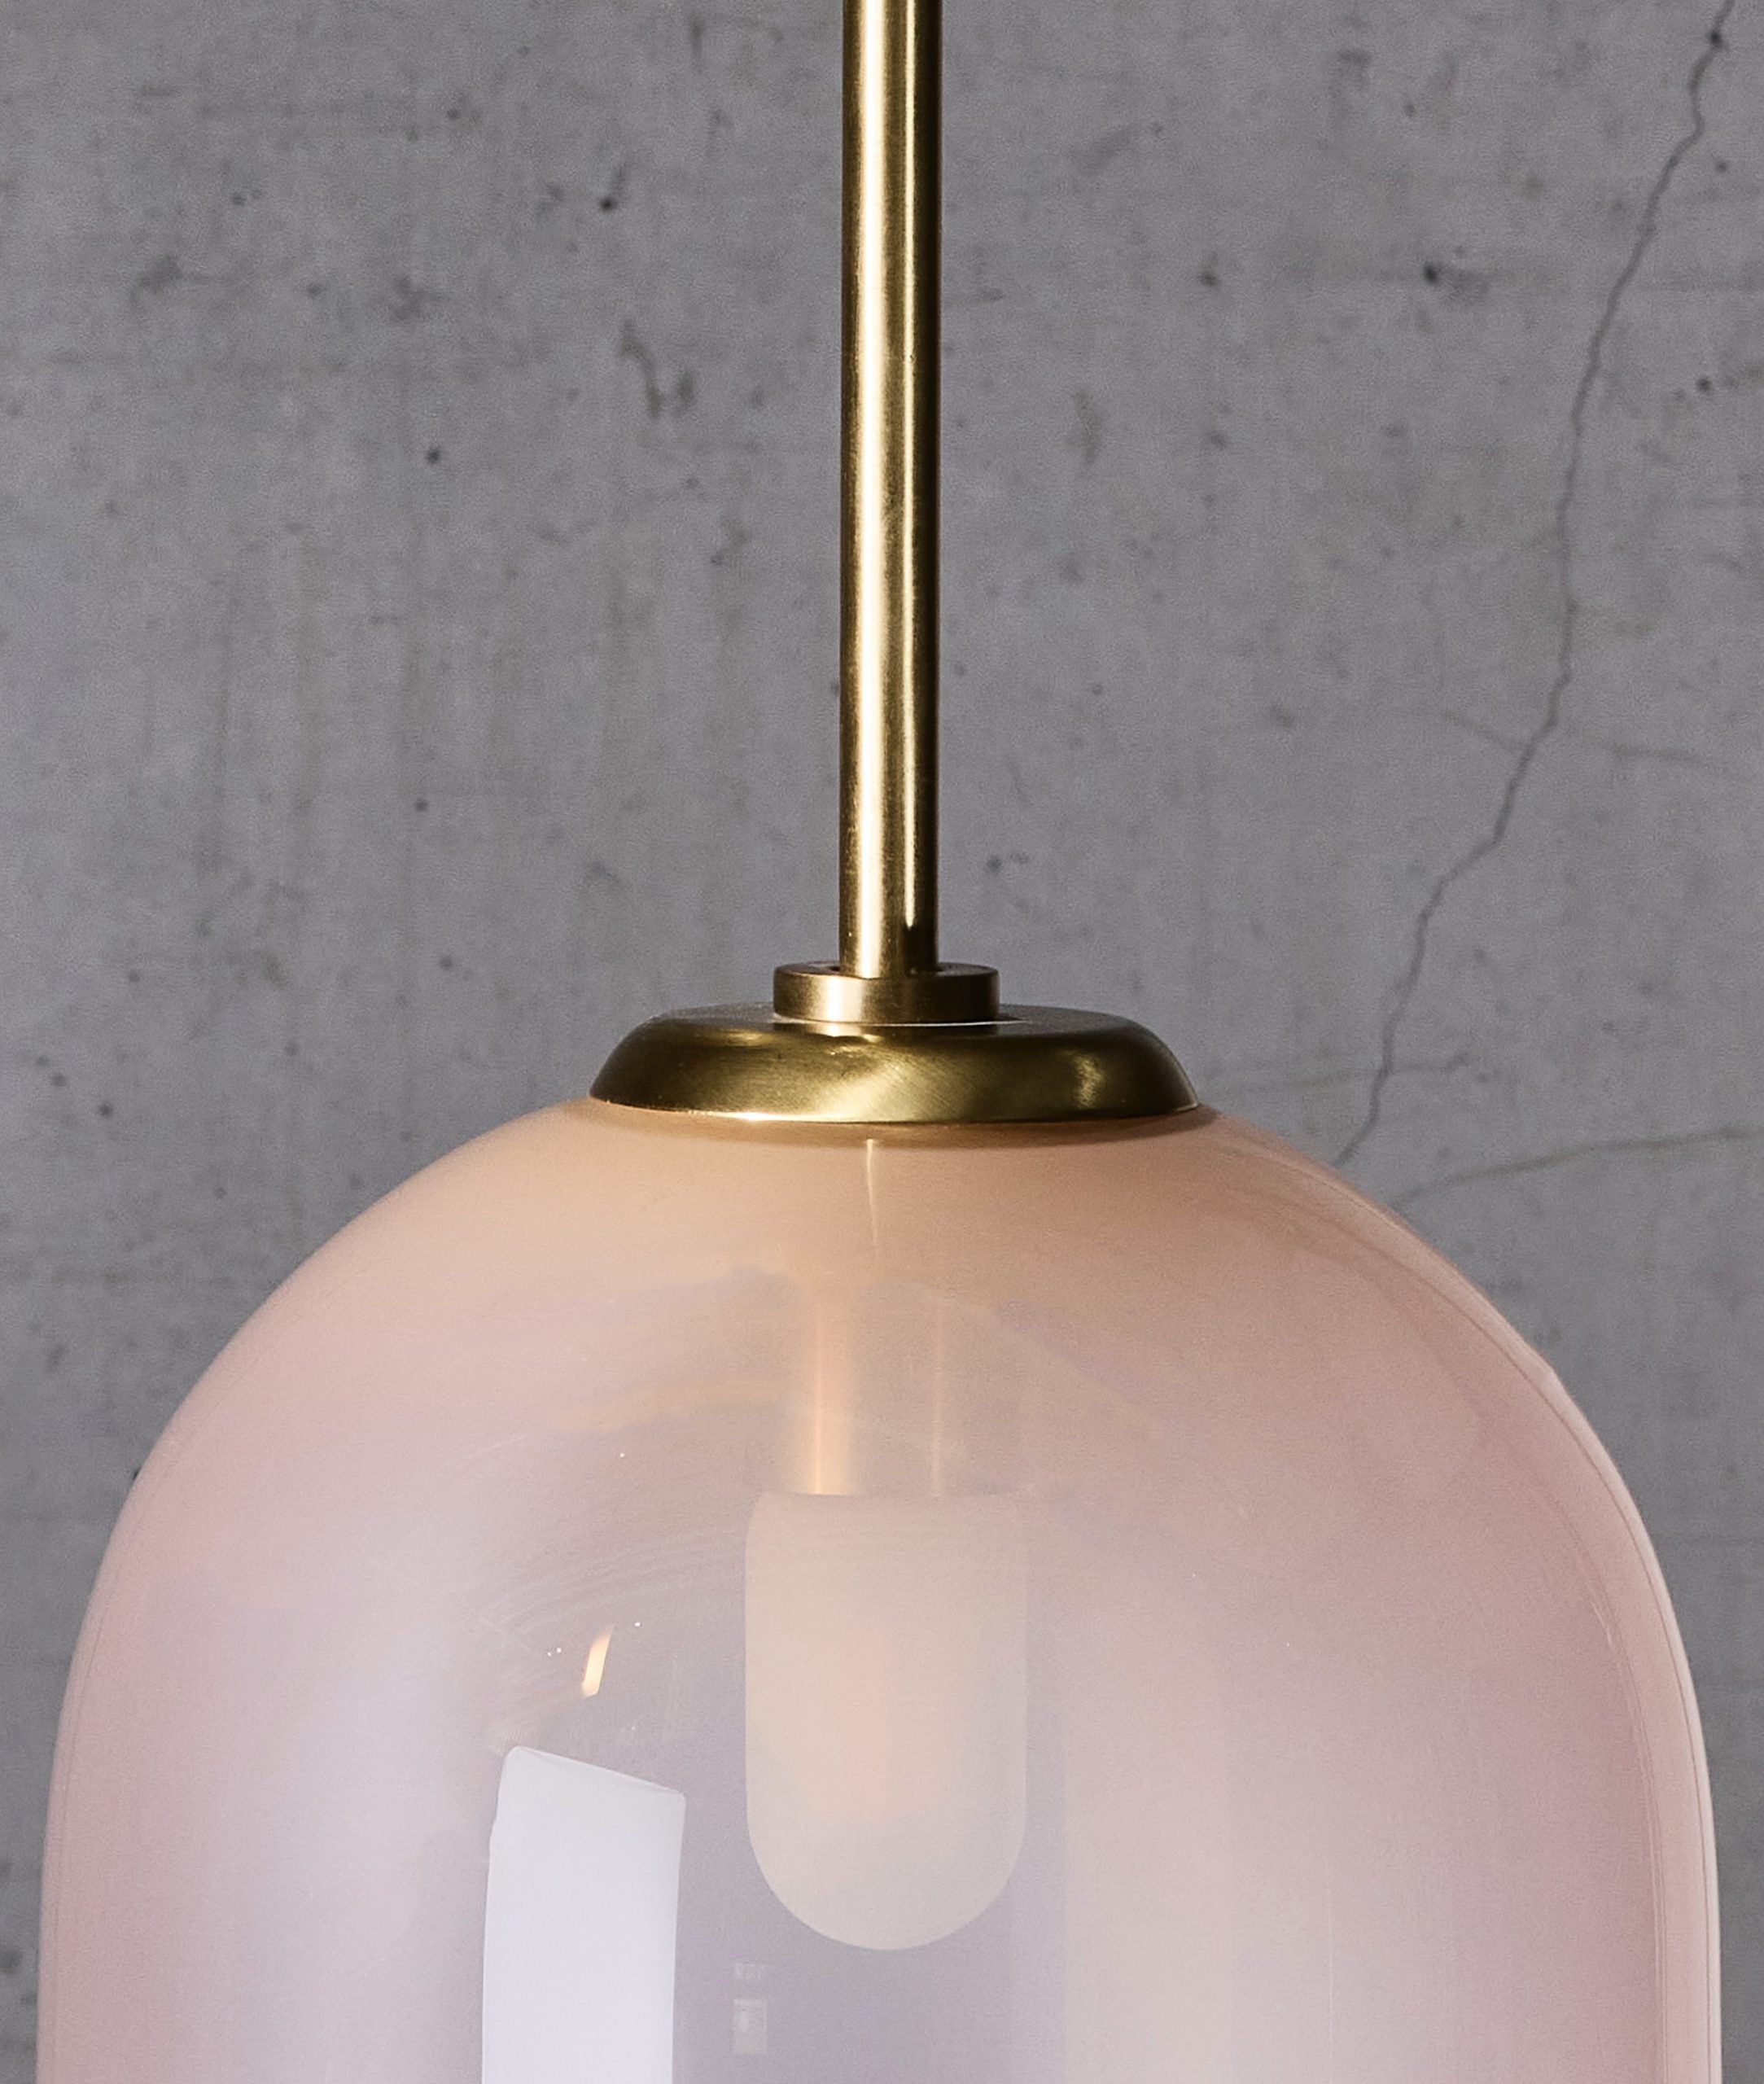 Pendul cu abajur din sticla suflata manual si design minimalist Pallas by Dechem